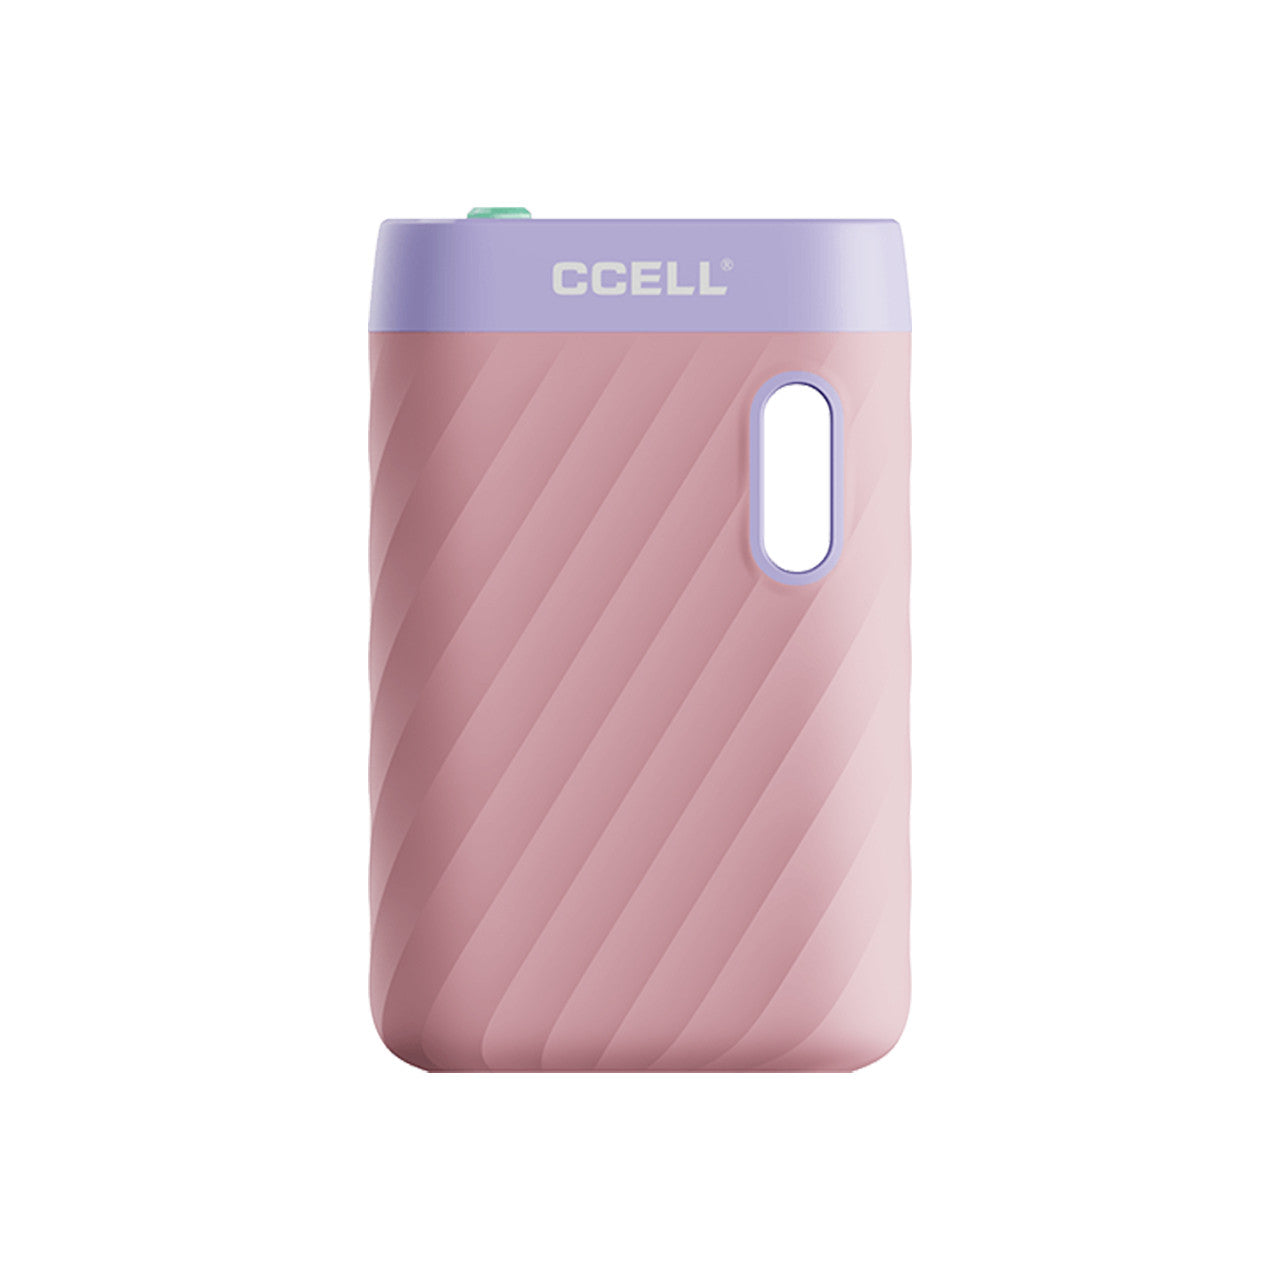 CCELL Sandwave 510 Vape Cartridge Battery Coral Pink